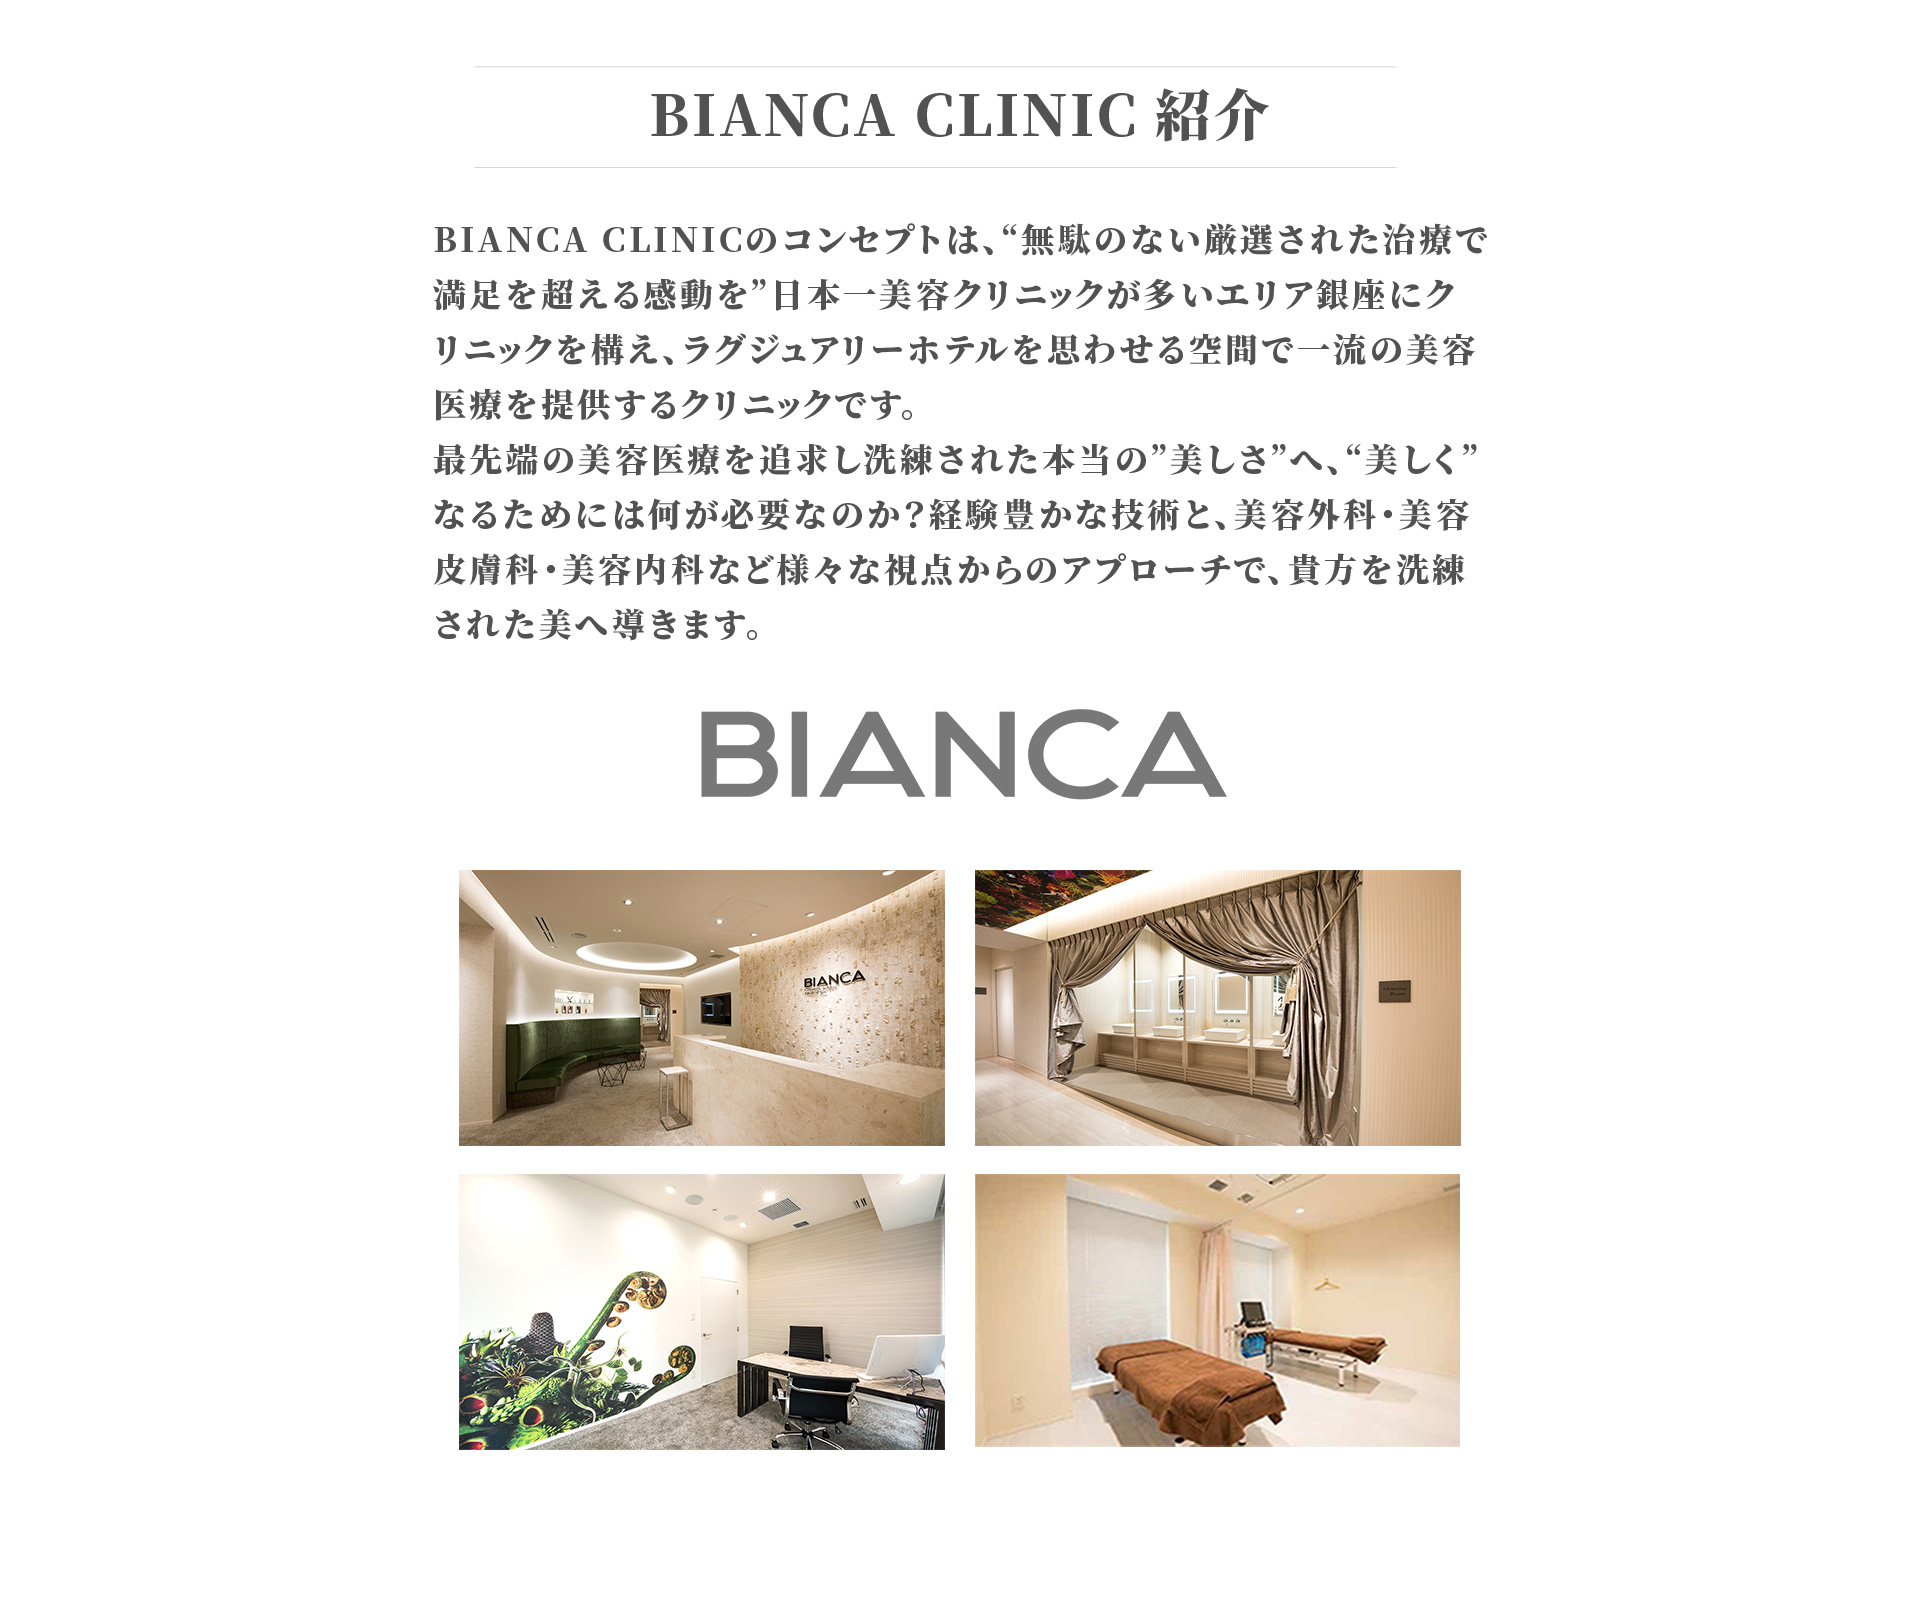 BIANCA CLINIC 紹介